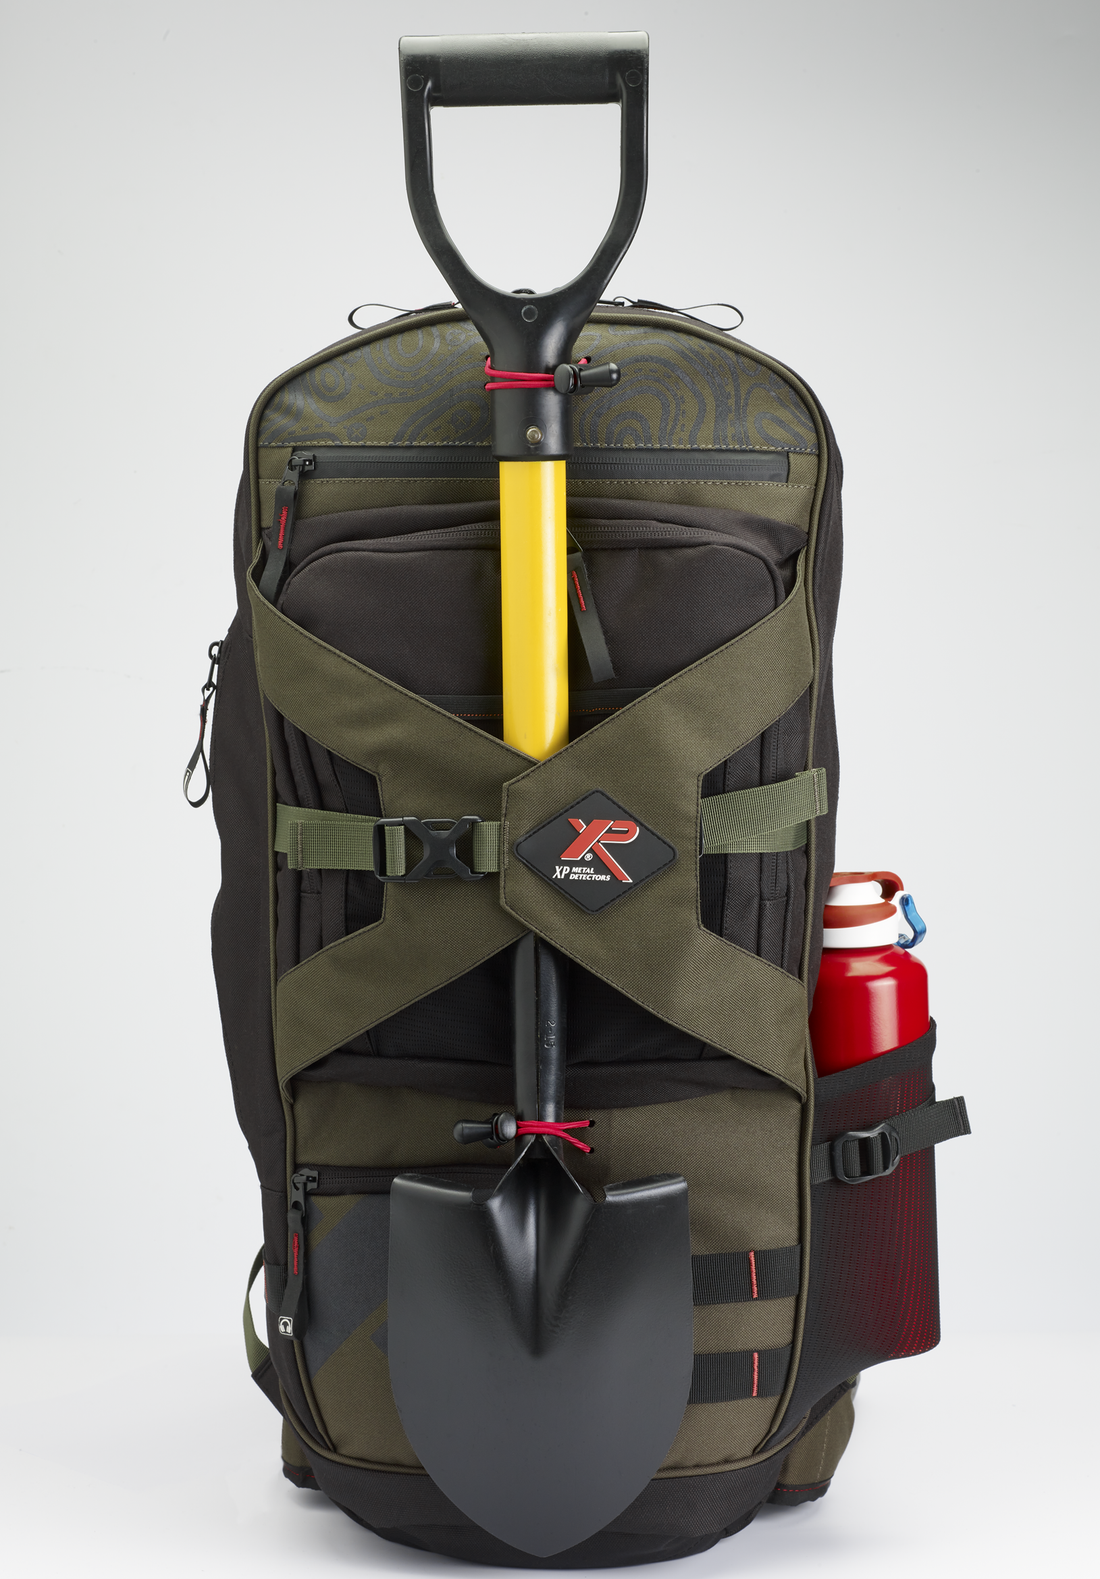 XP Metal Detector Backpack 280 shown carrying shovel